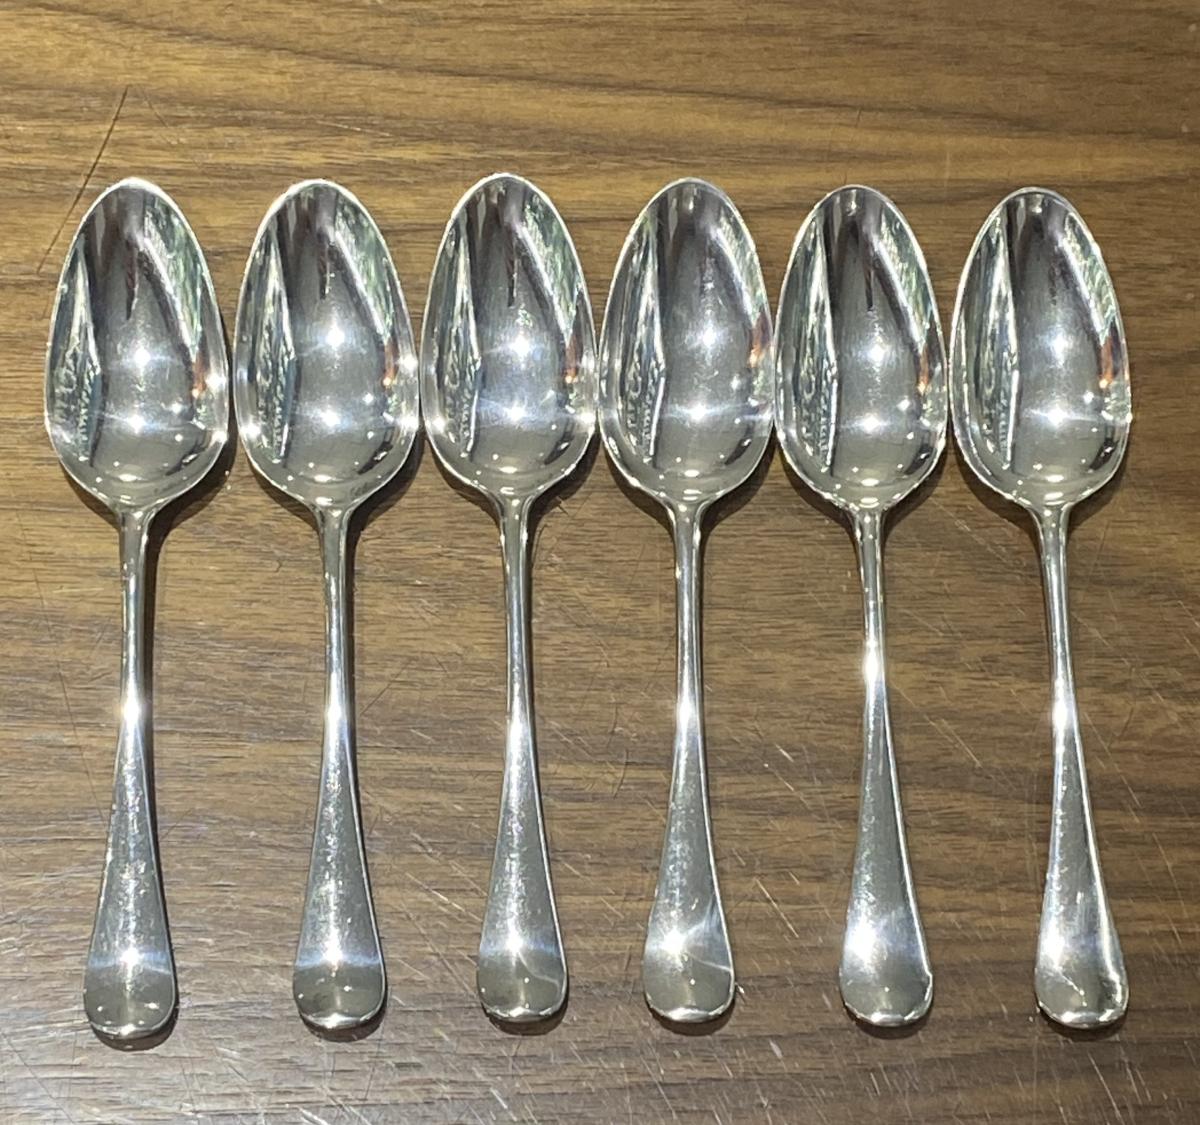 Ebenezer Coker George II Hanoverian silver  dessert spoons 1755